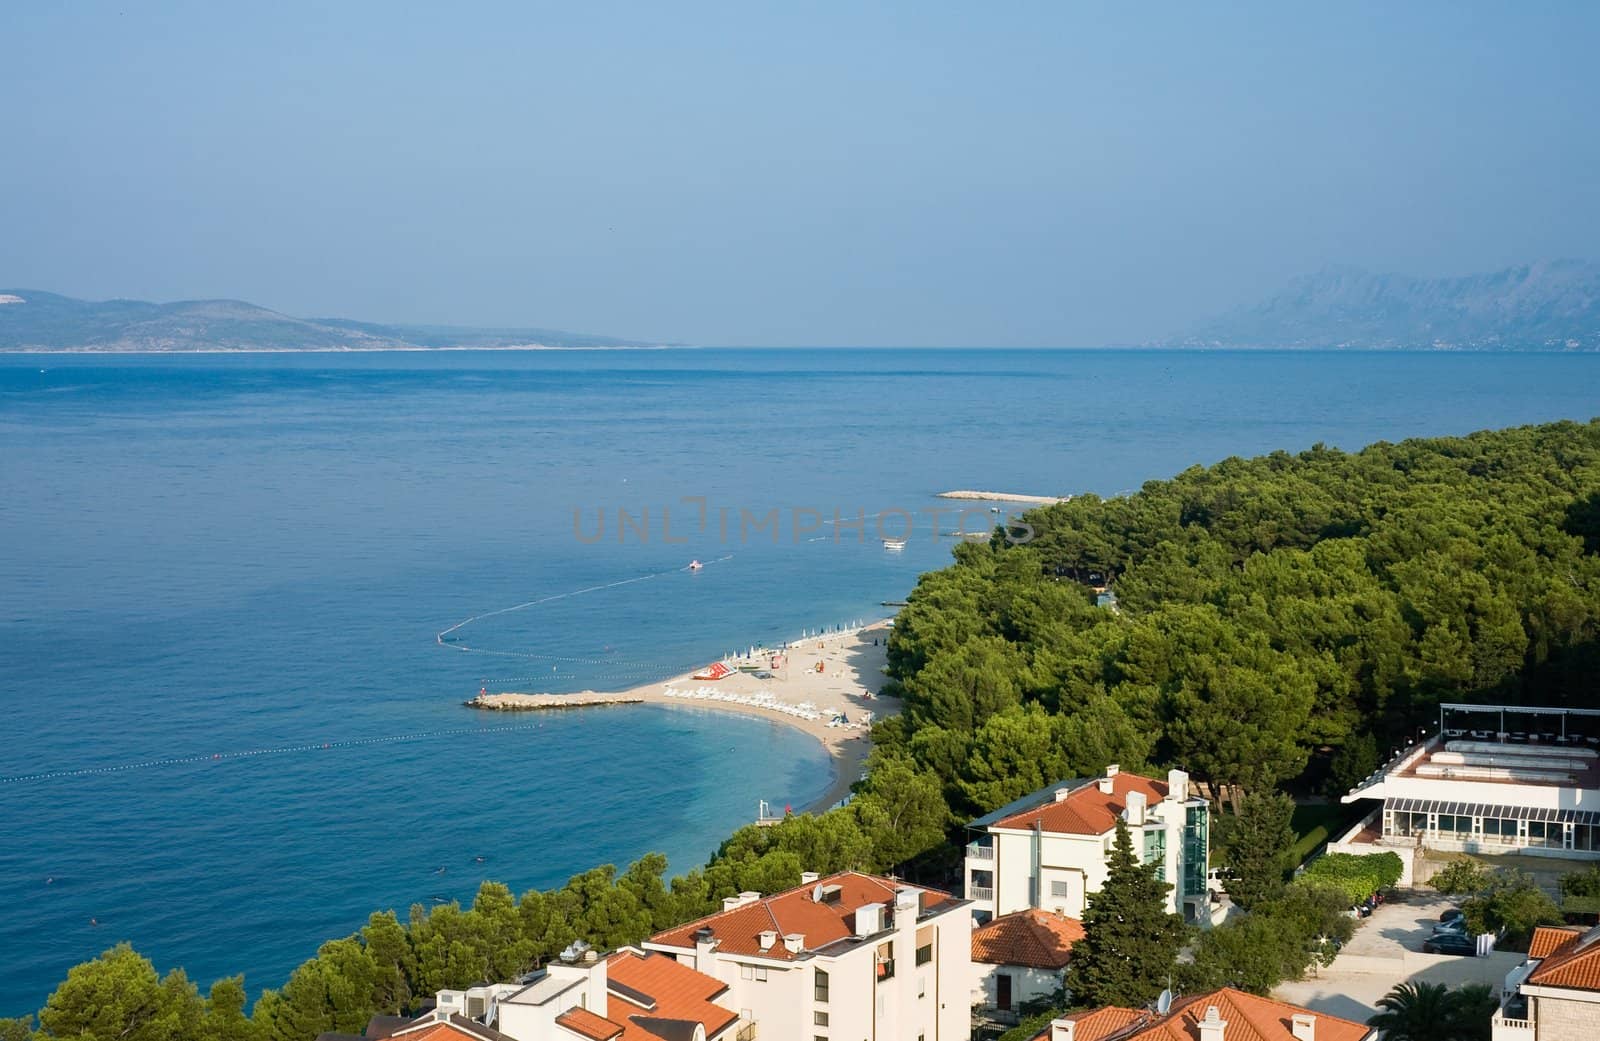 Resort Makarska. Croatia by nikolpetr